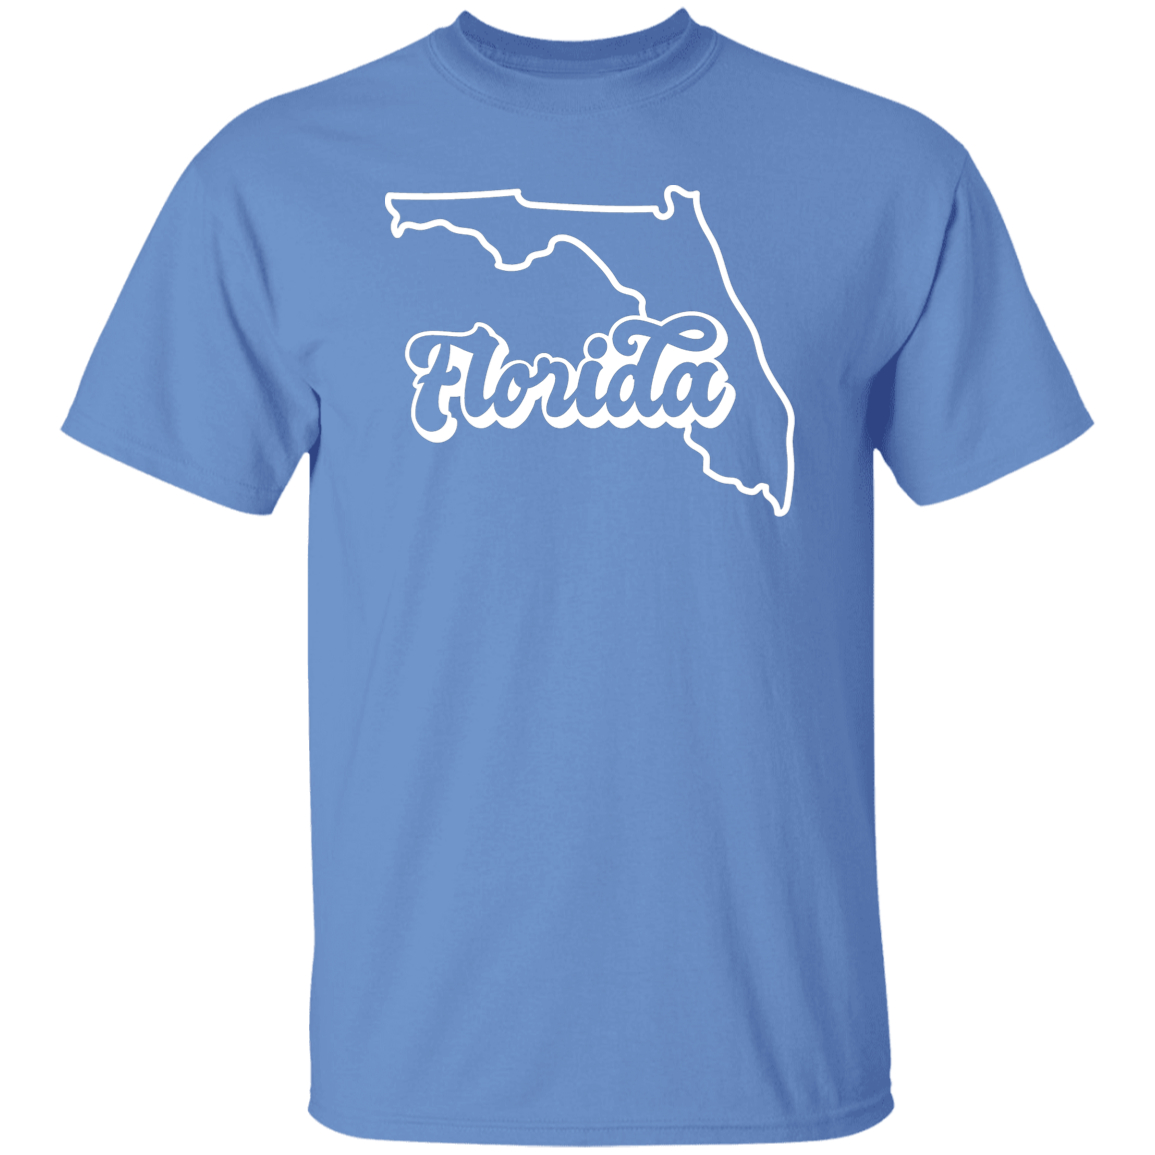 Florida State Outline White Print T-Shirt